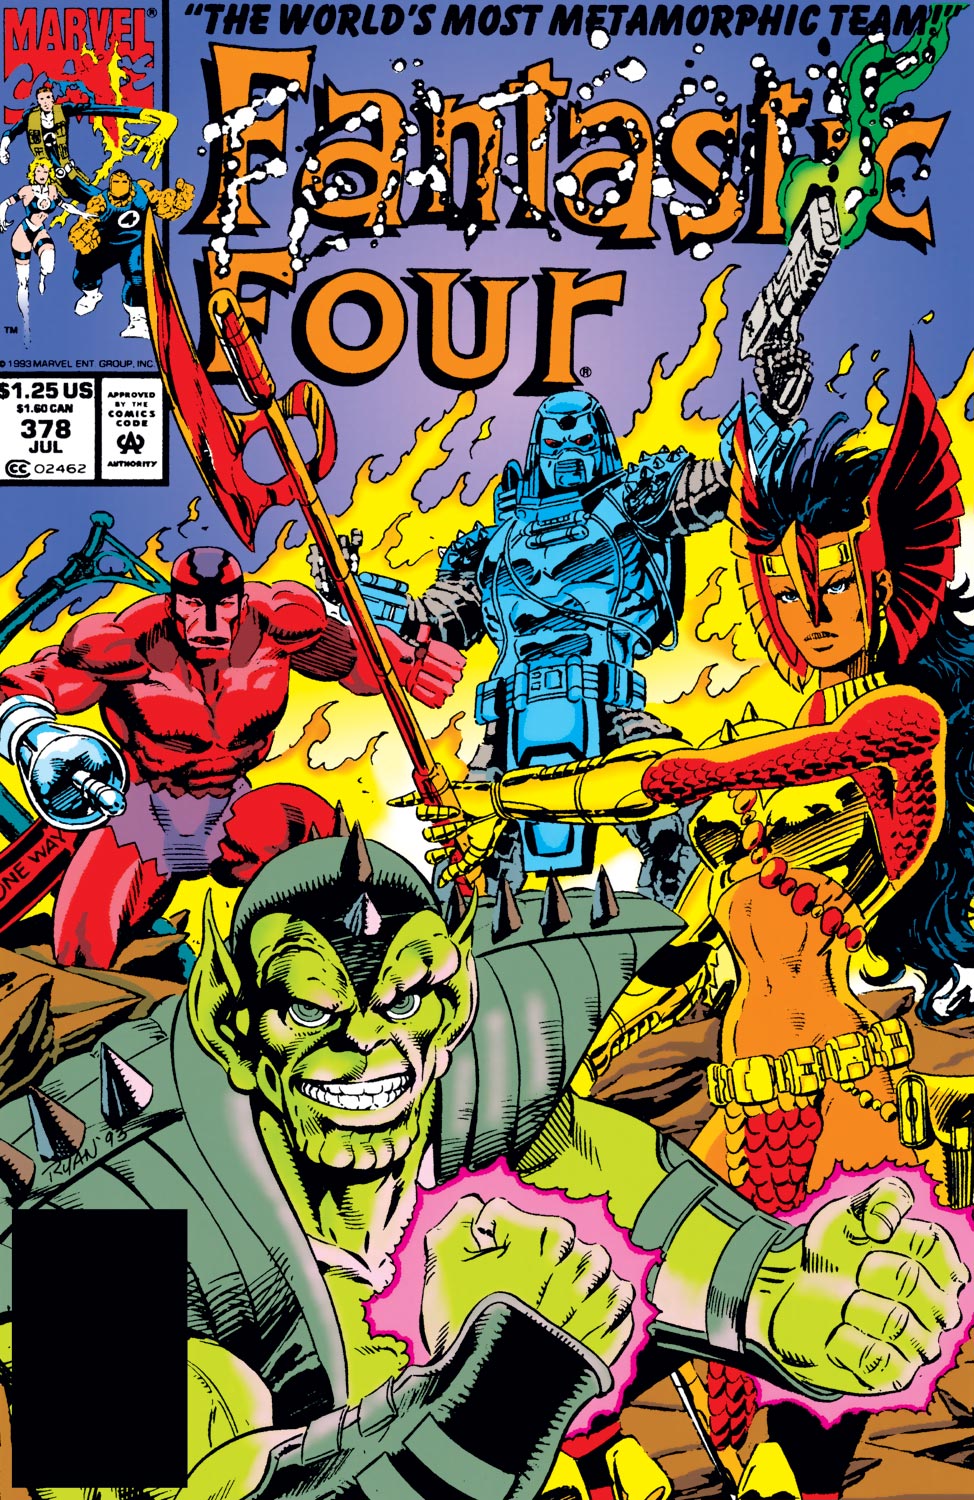 Fantastic Four (1961) #378